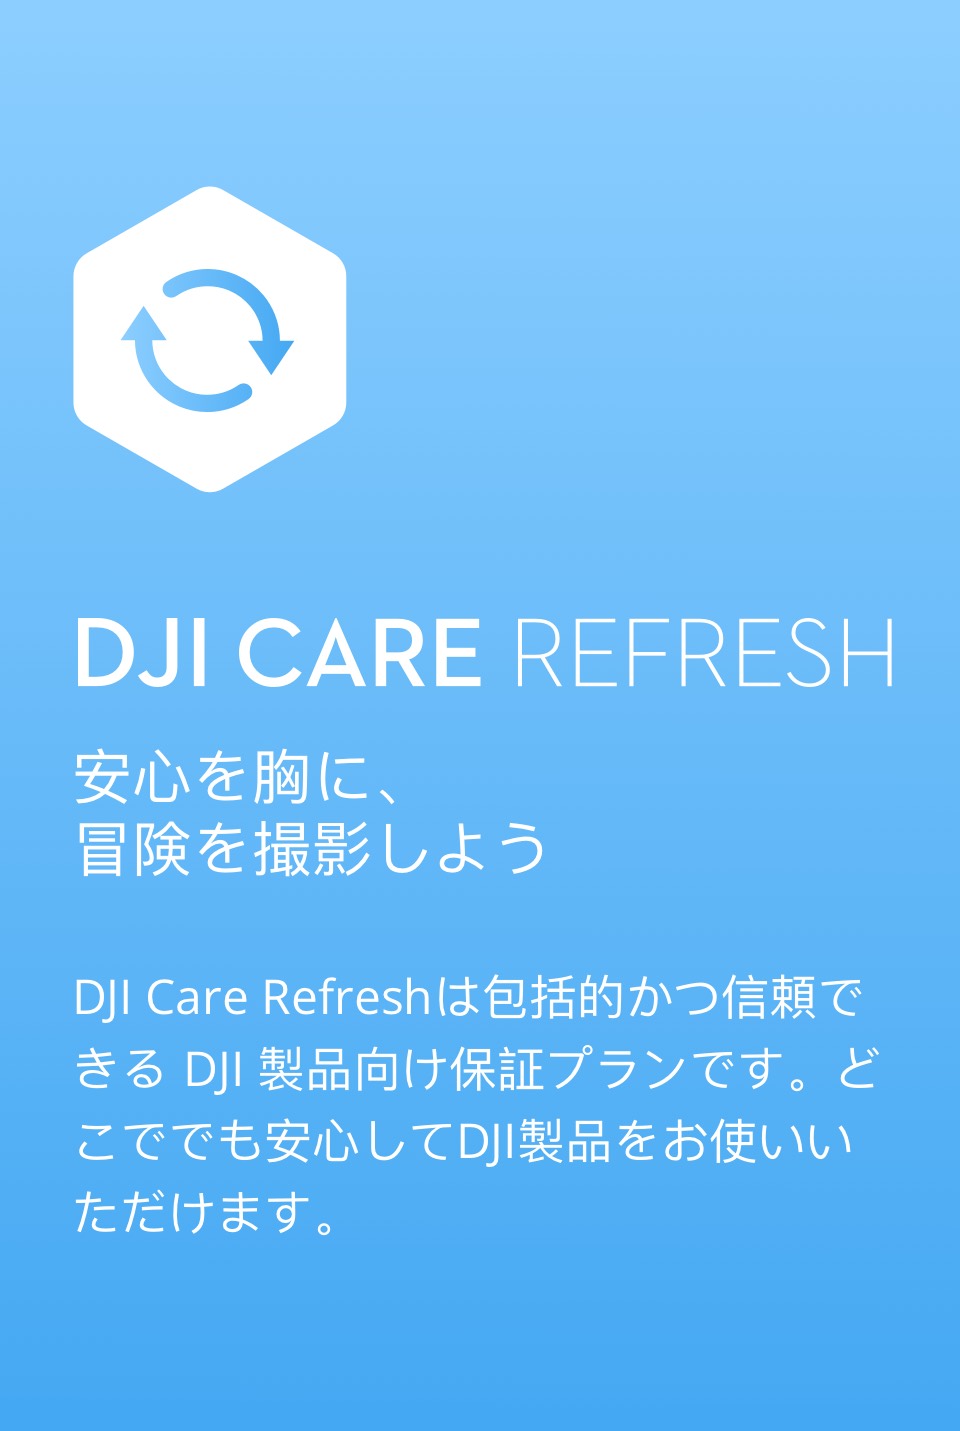 DJI Care Refresh (Ronin-SC) JP